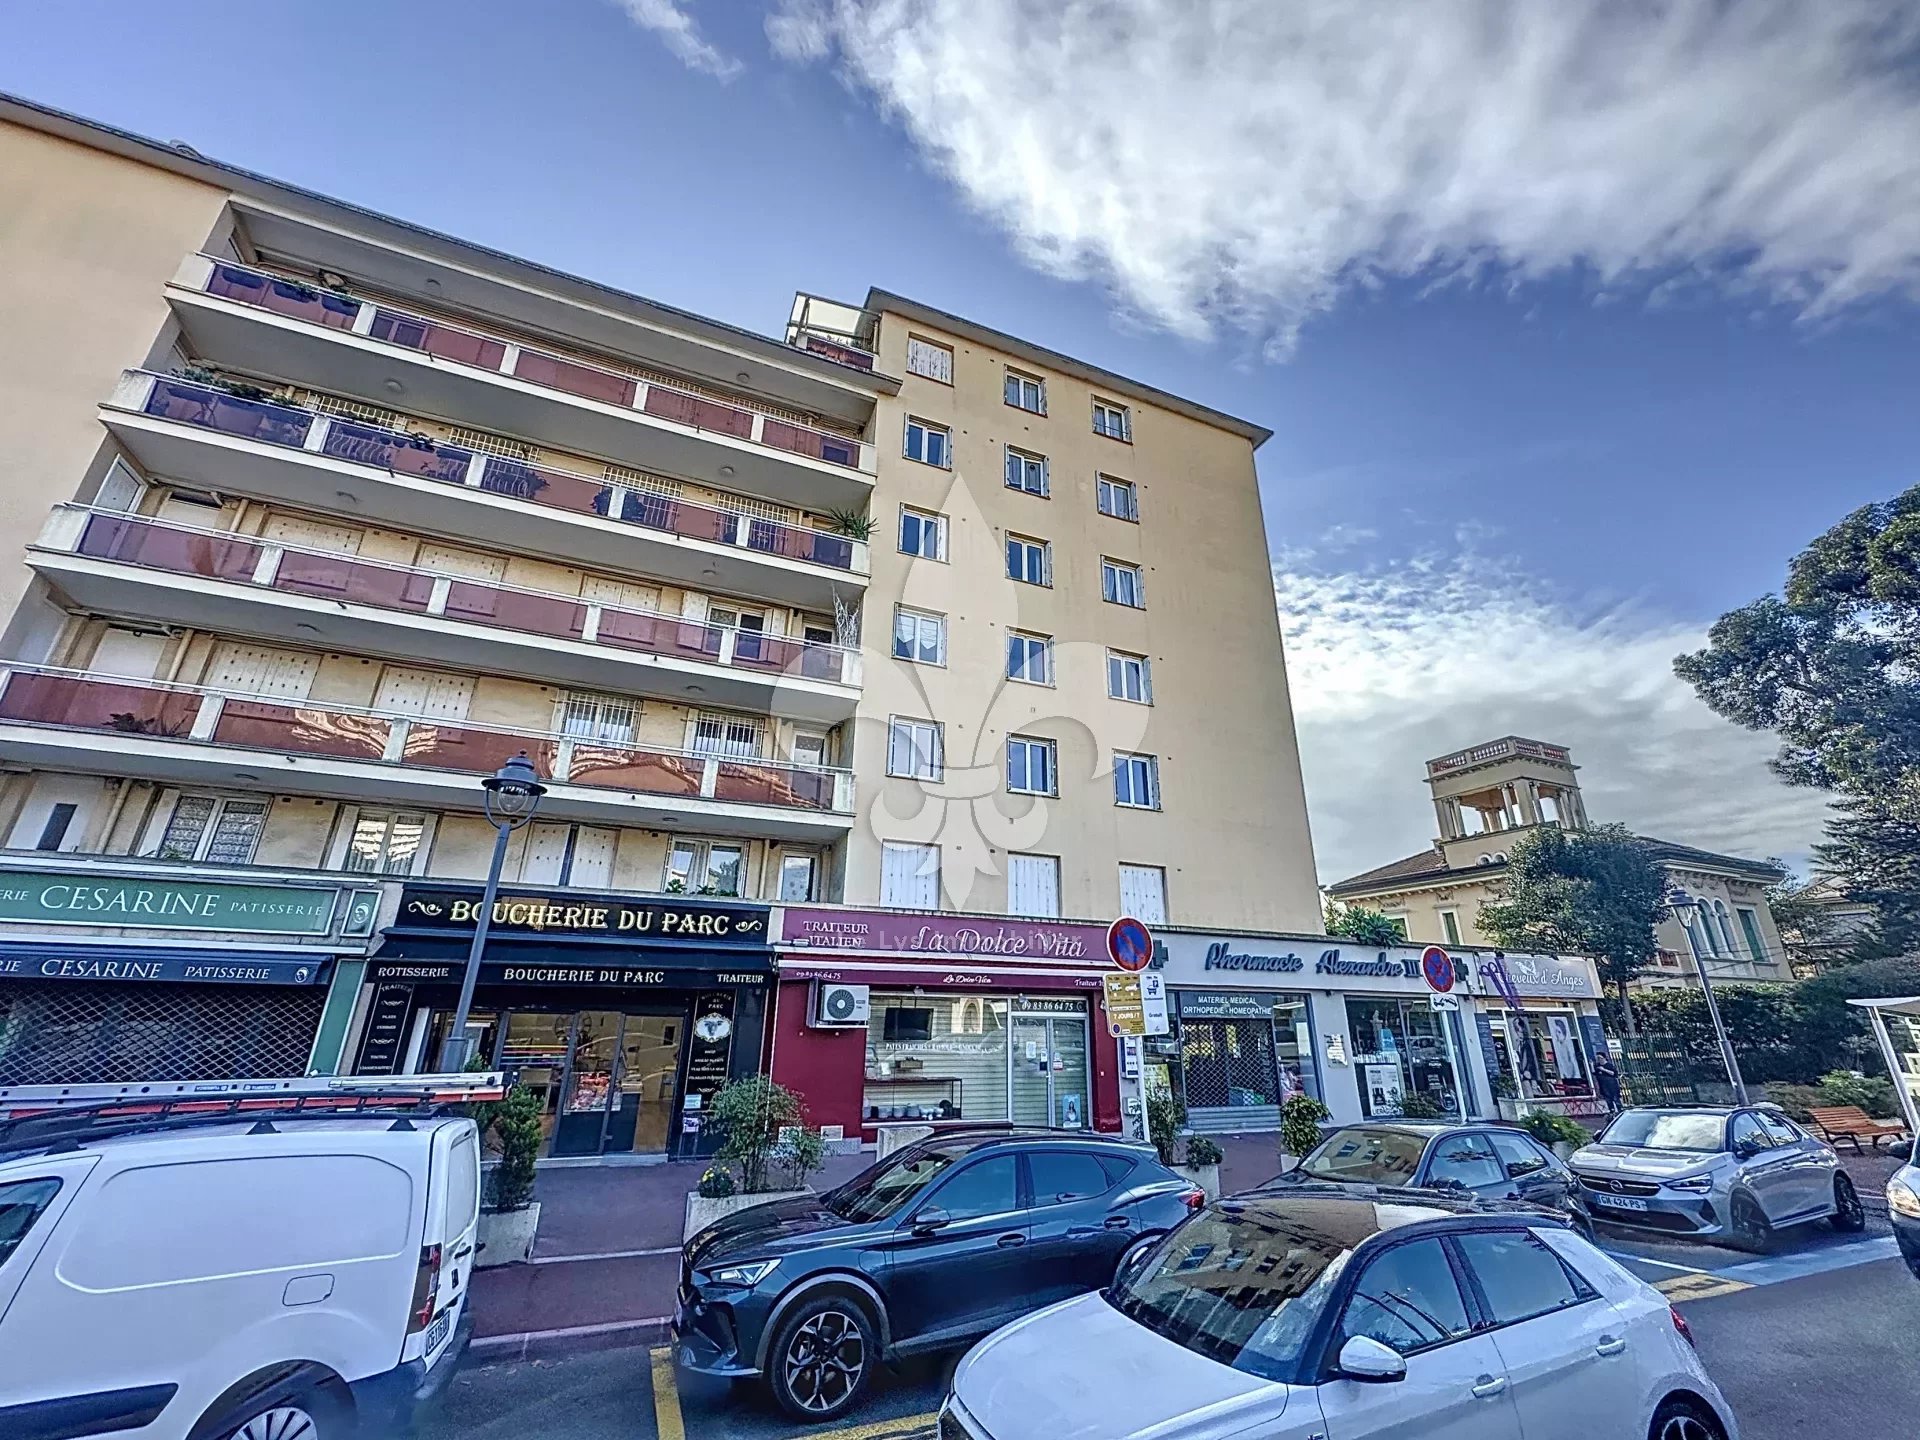 Cannes - Alexandre III: 3-room bourgeois duplex apartment